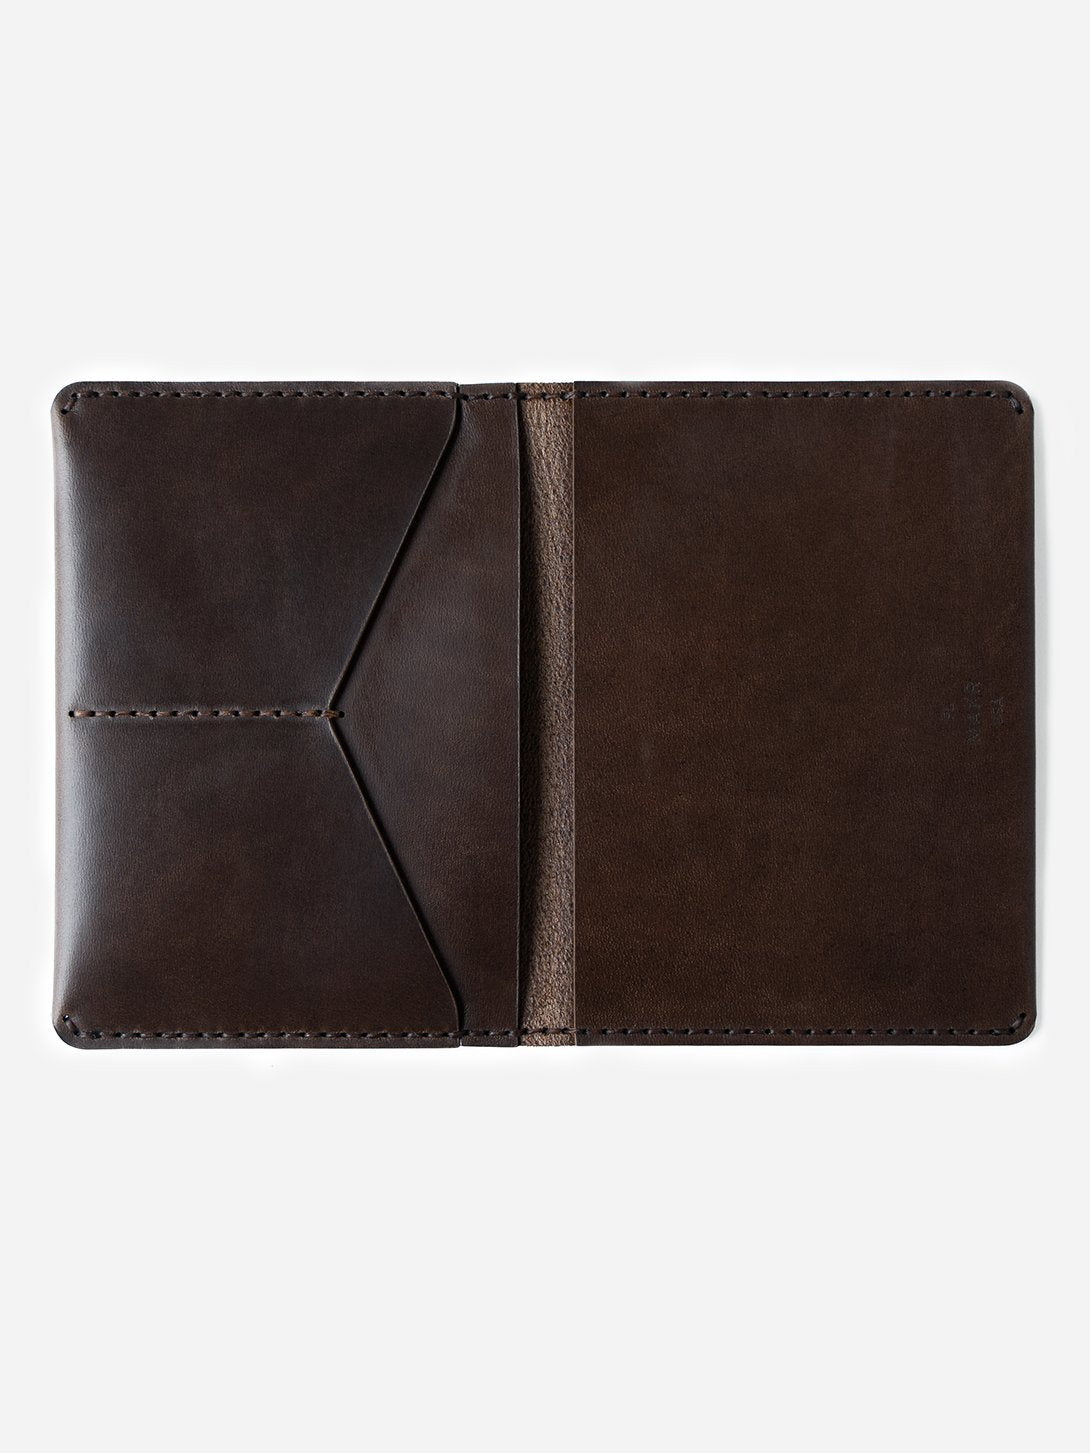 BARK mens leather wallet brown bifold passport wallet makr